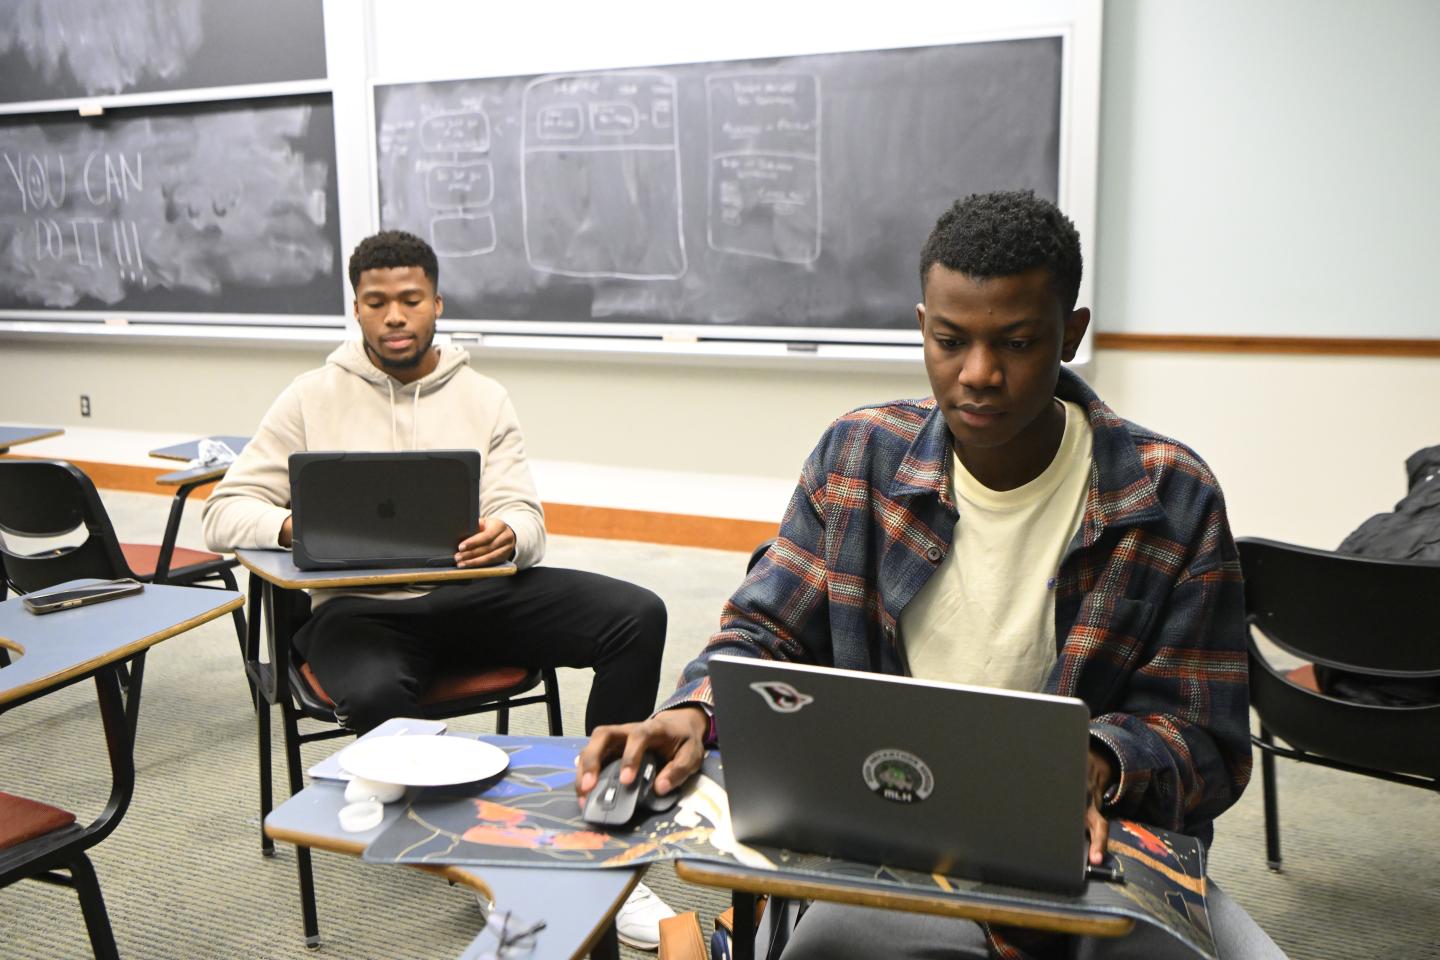 HopHacks students with laptops